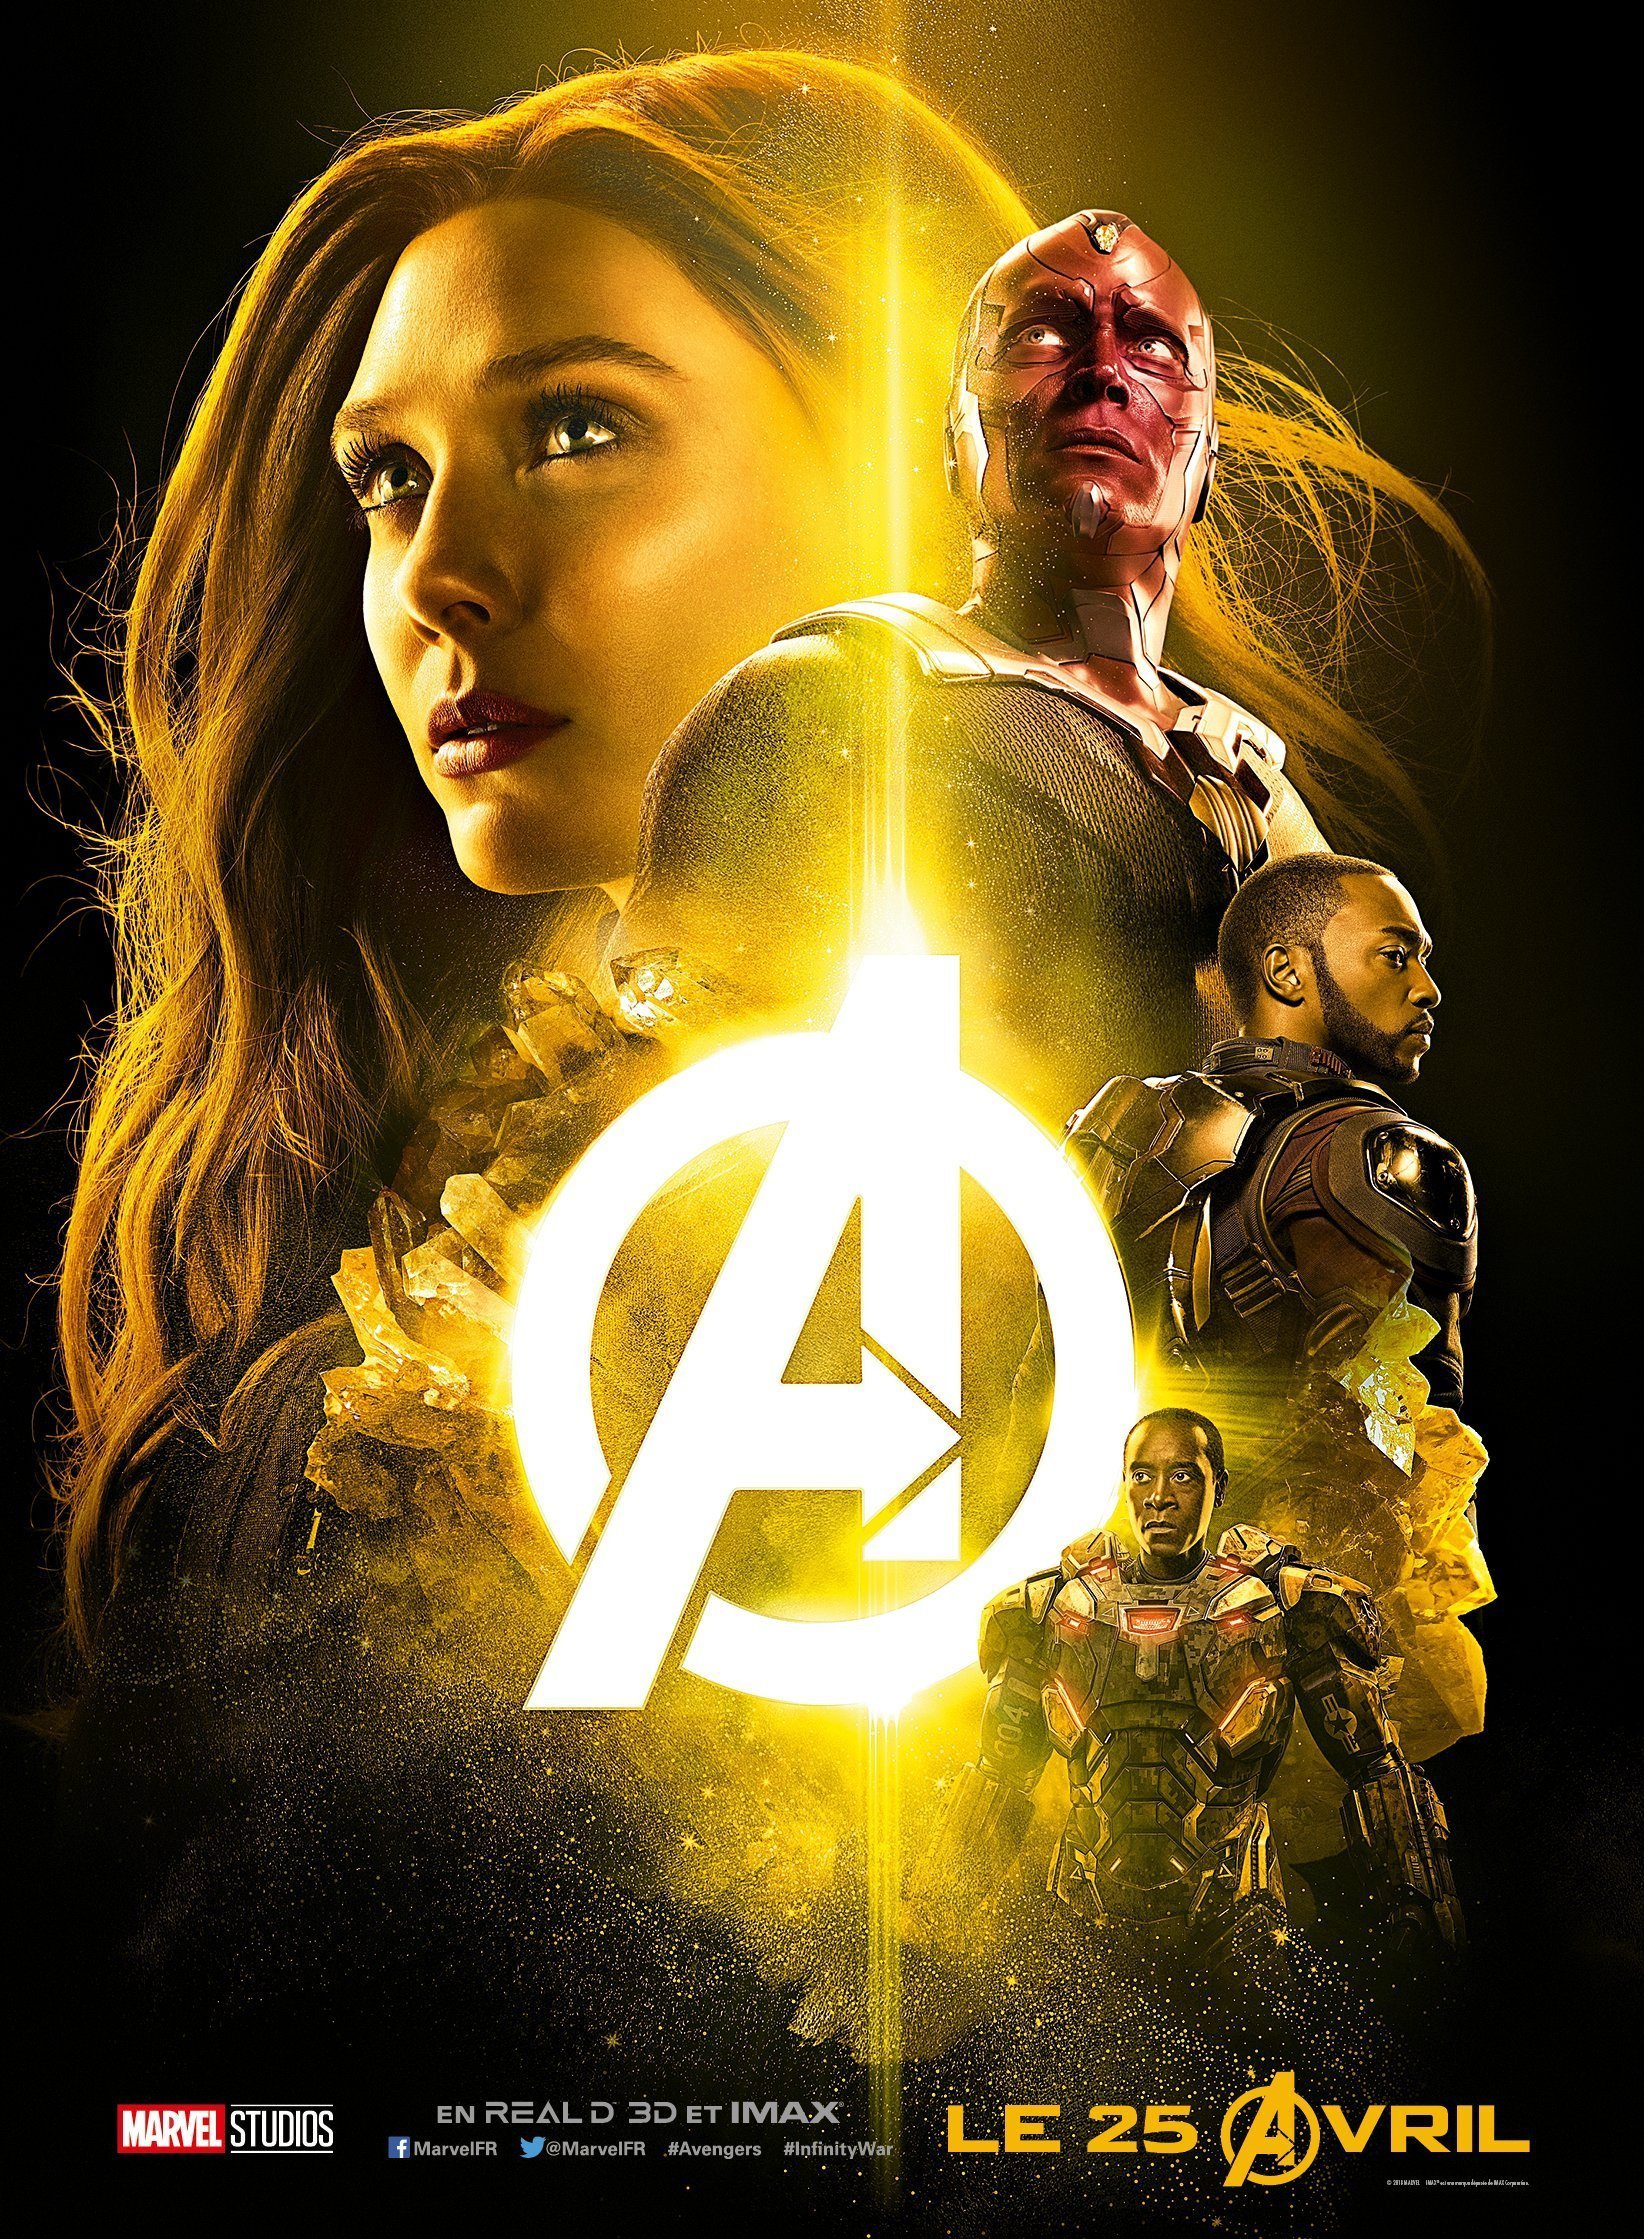 Affiche du film Avengers: Infinity War avec l'équipe jaune